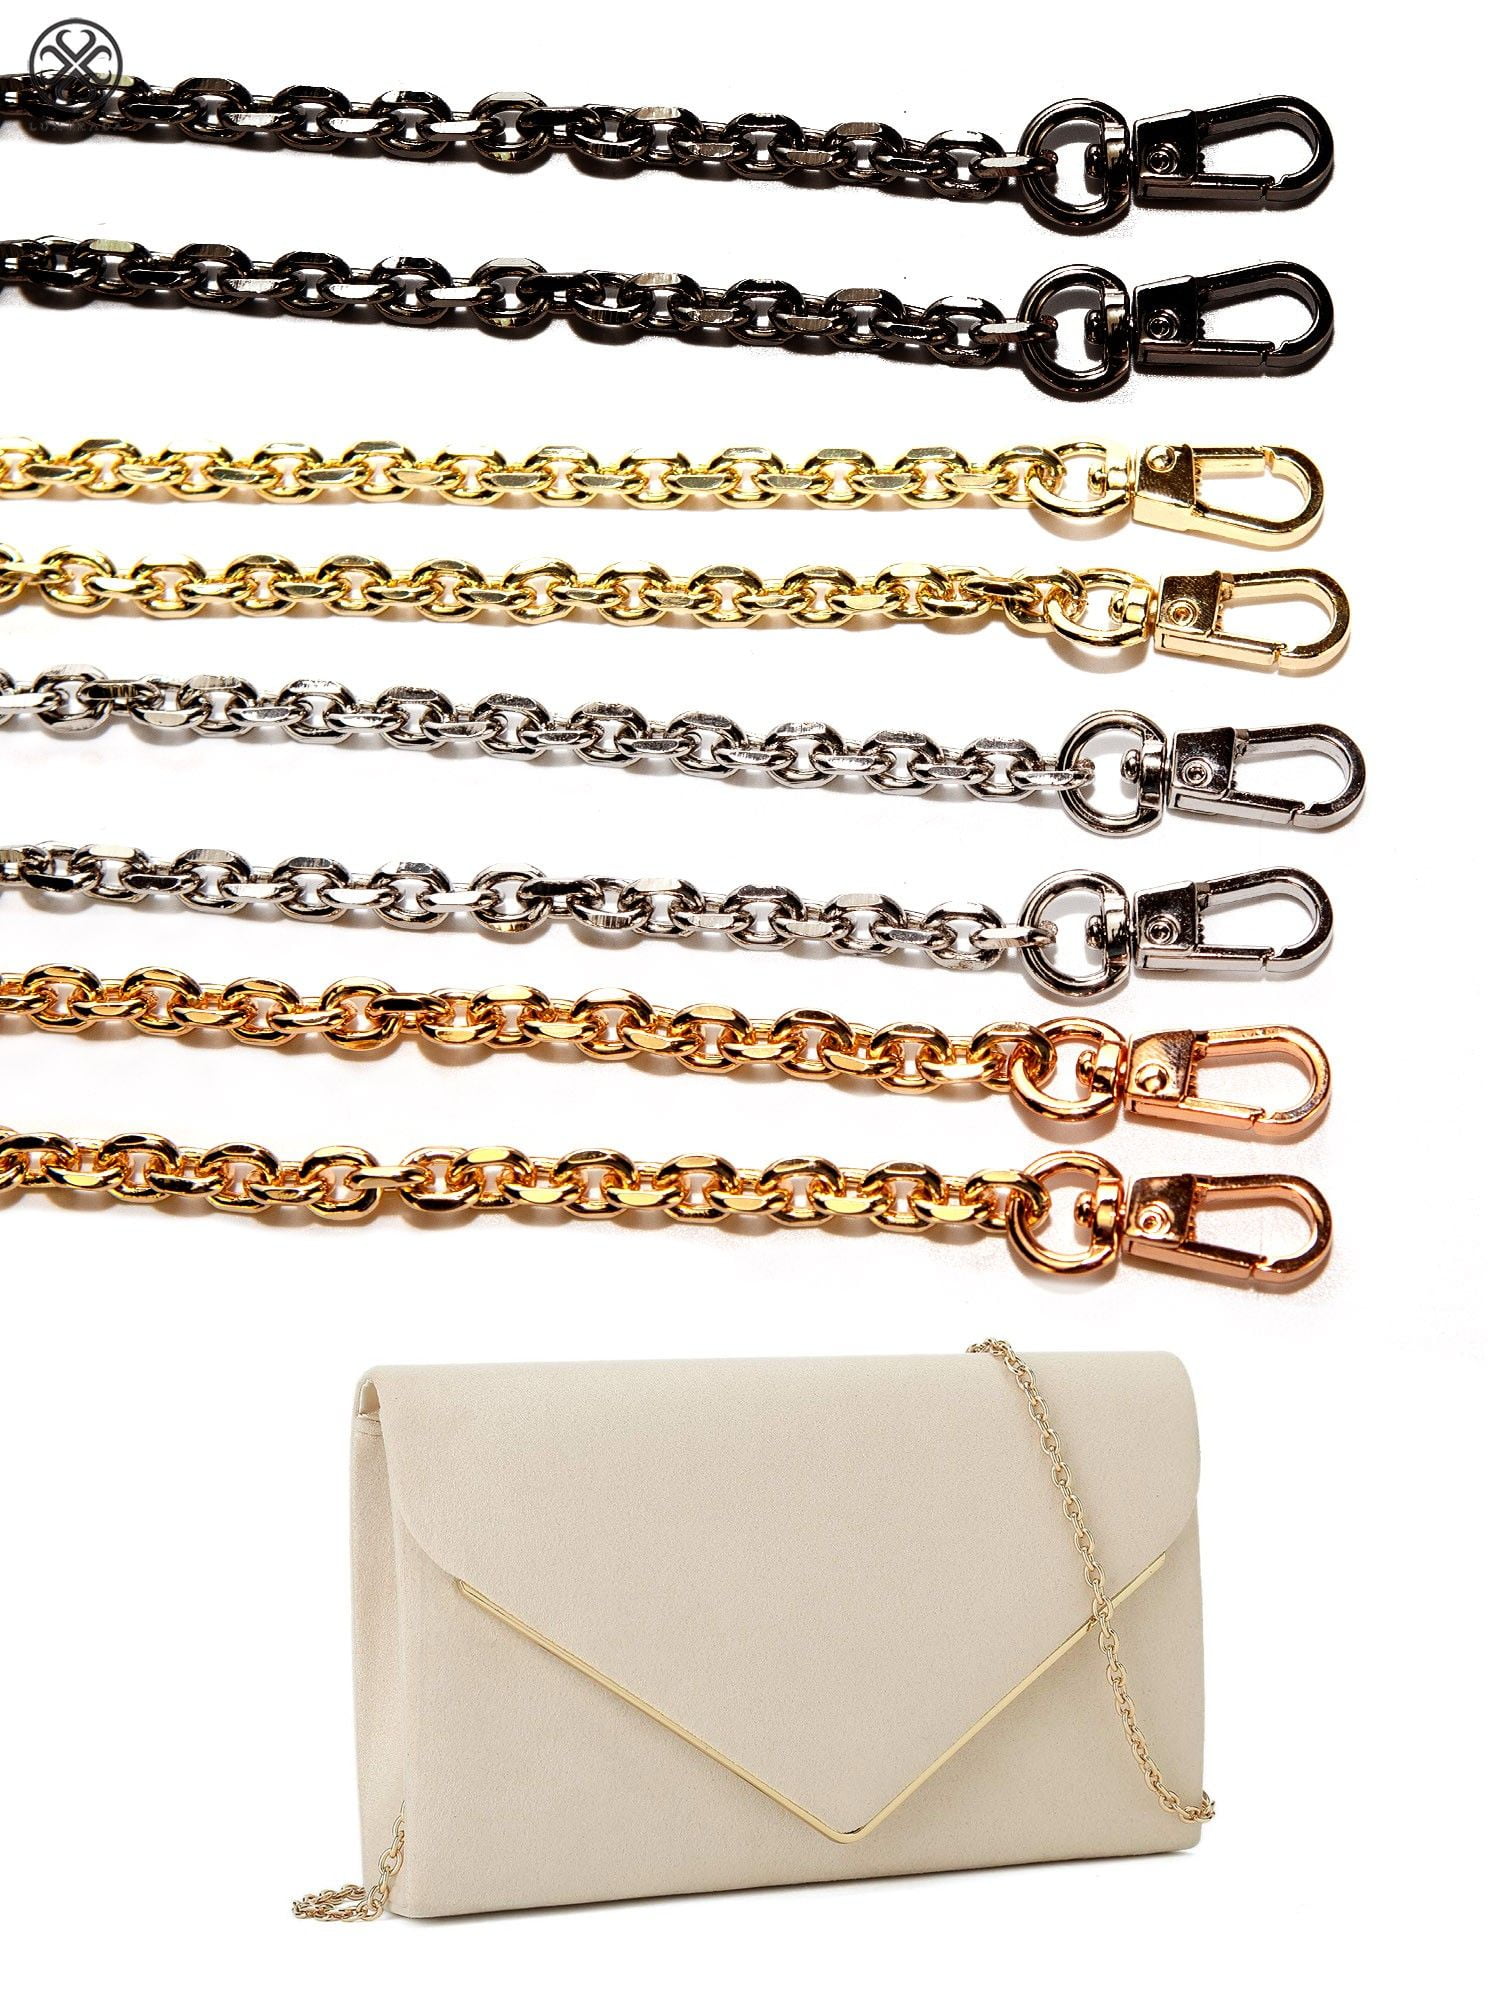 Luxtrada 47 Purse Chain Strap-Handbags Replacement Chains